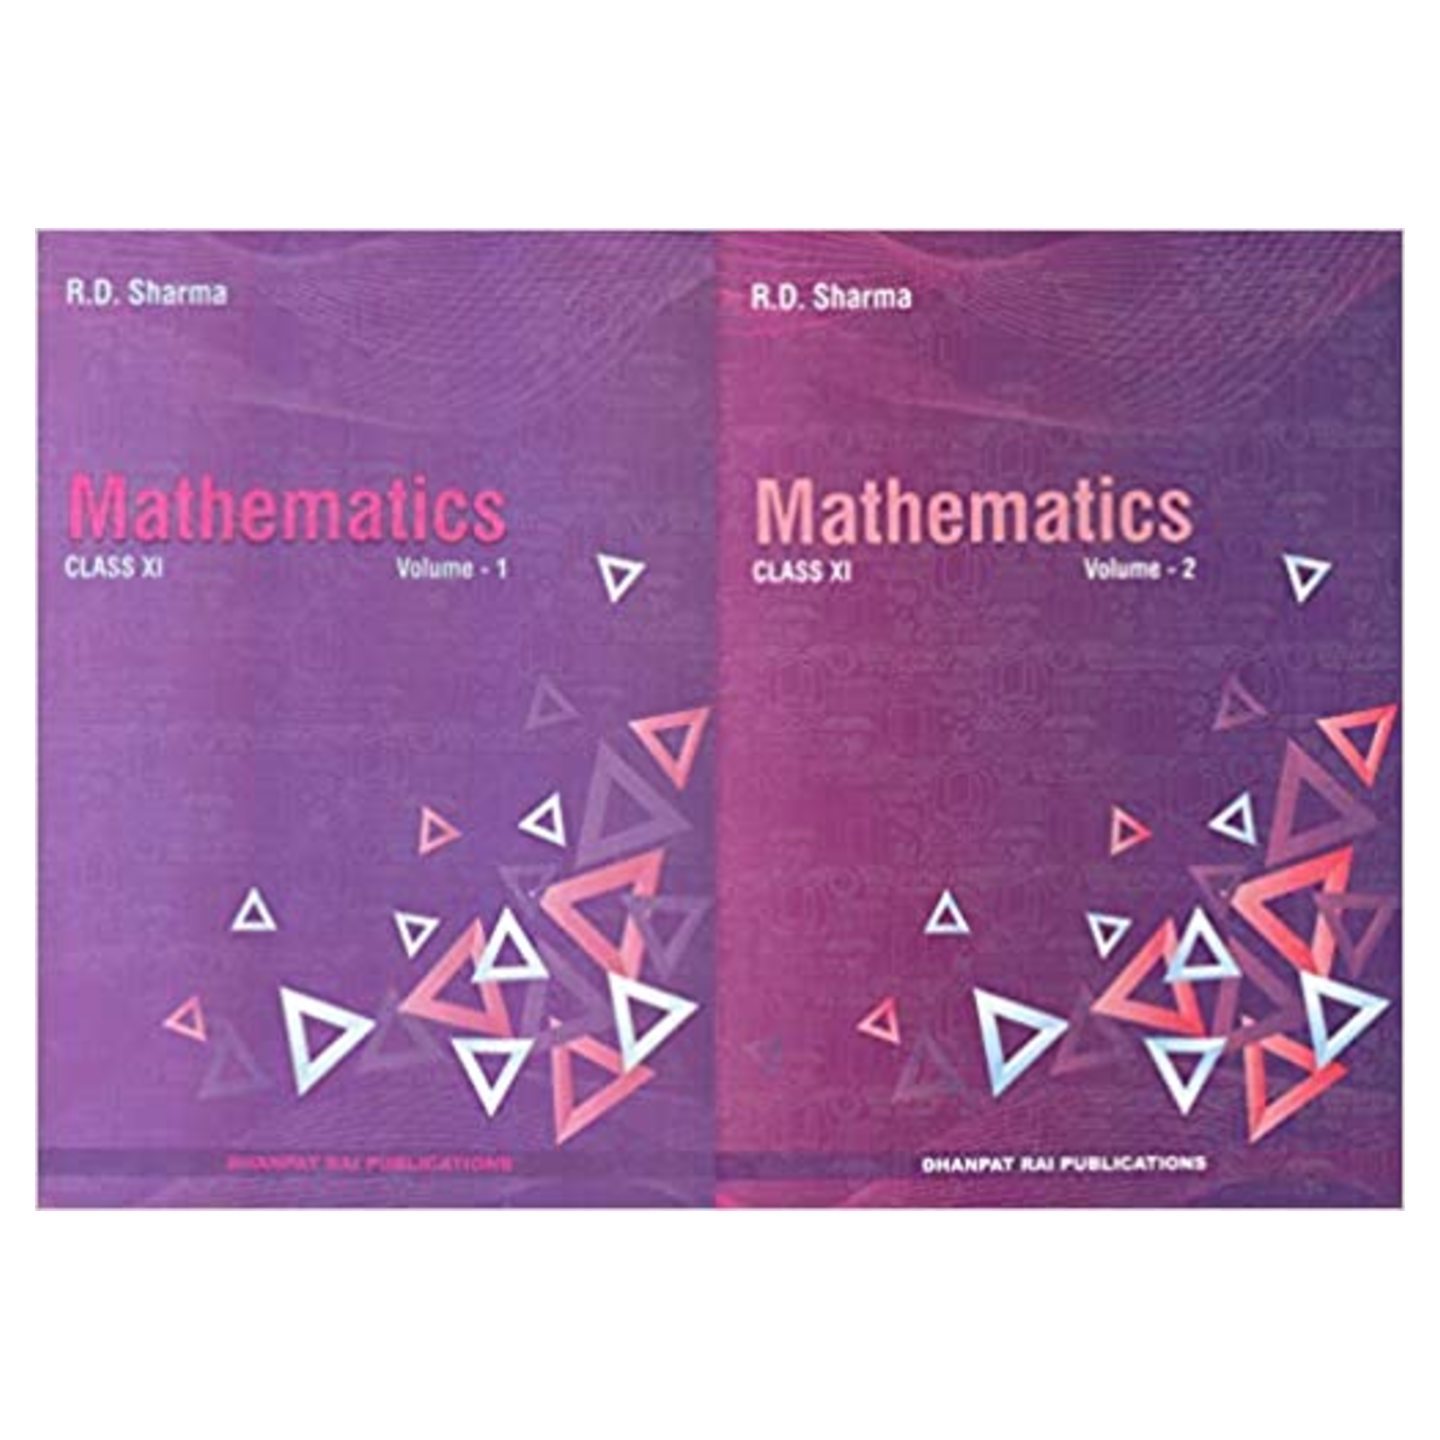 RD SHARMA Mathematics for Class 11 set of 2 volumes